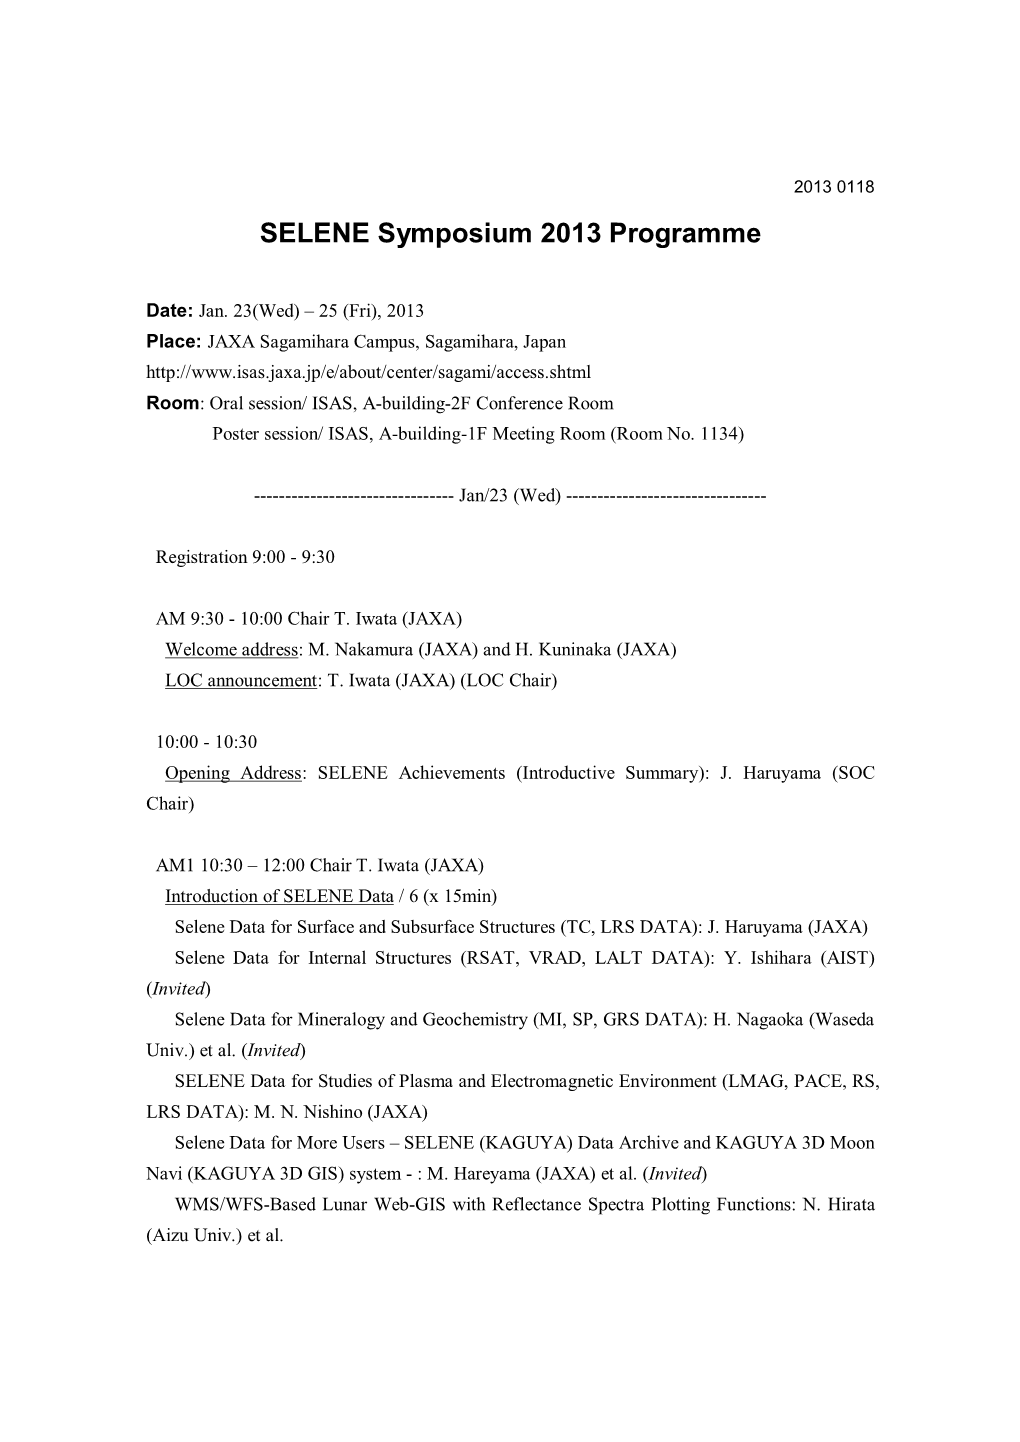 SELENE Symposium 2013 Programme